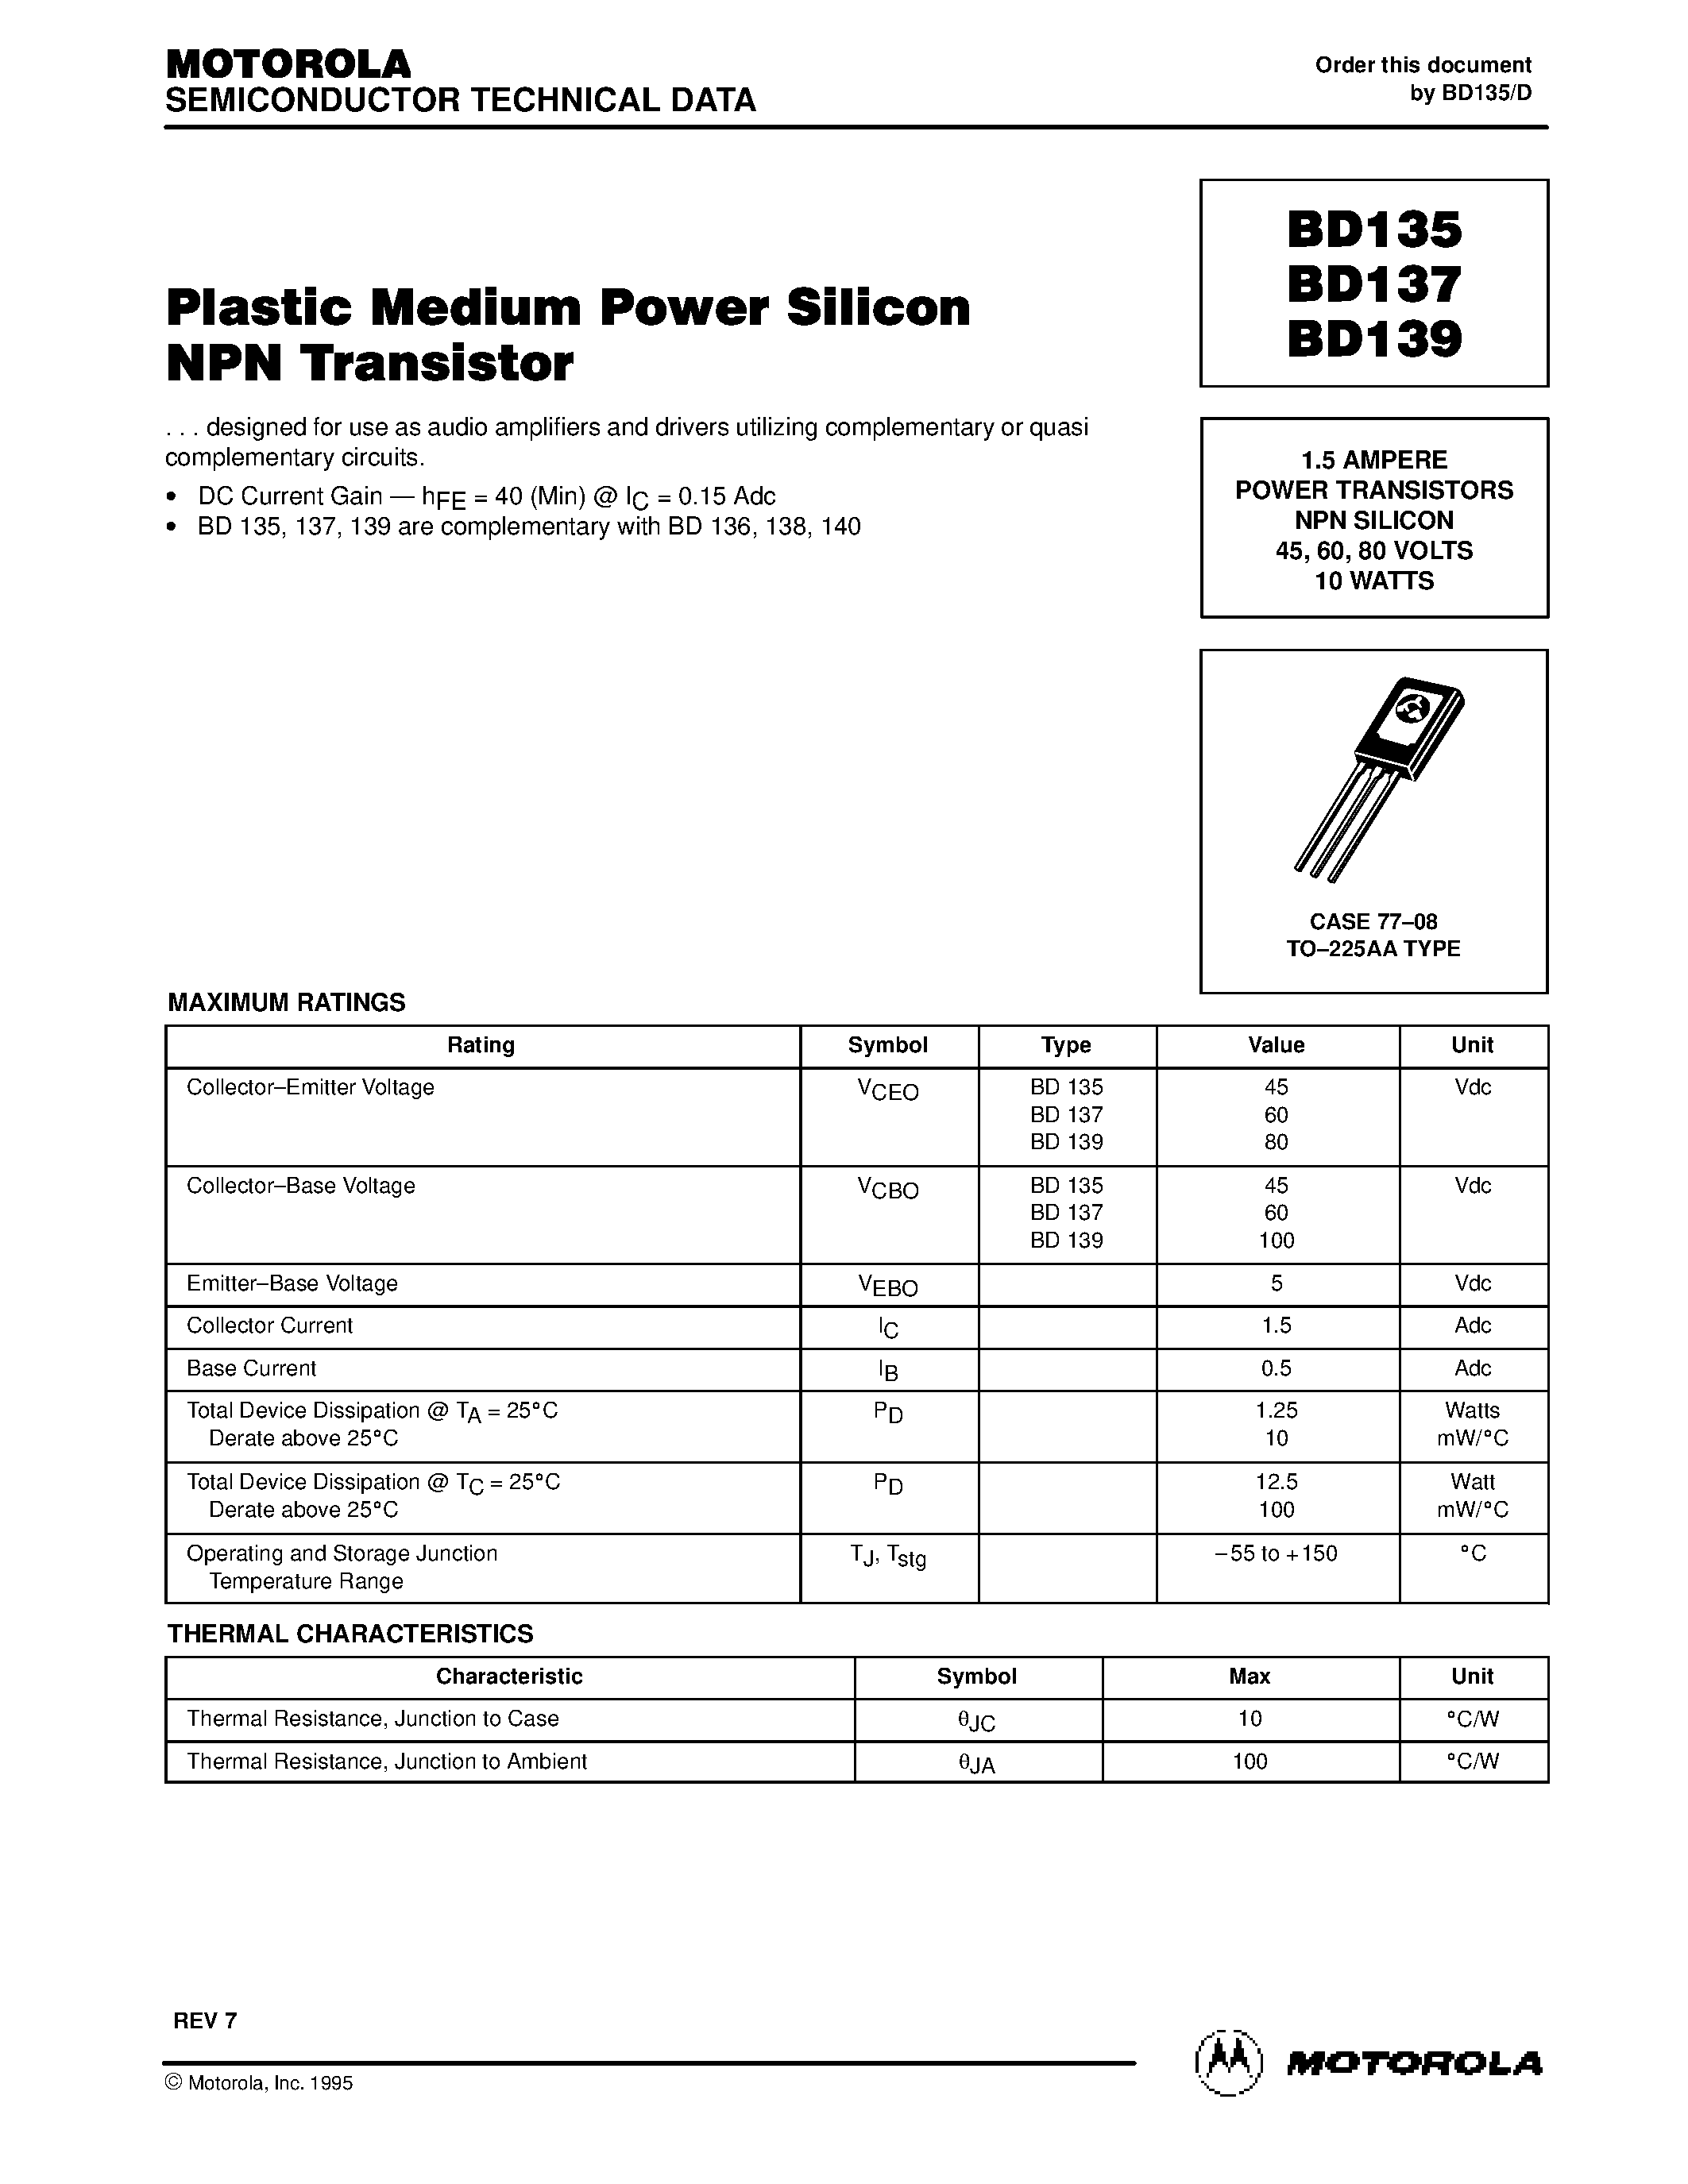 Datasheet BD135 - Plastic Medium Power Silicon NPN Transistor page 1